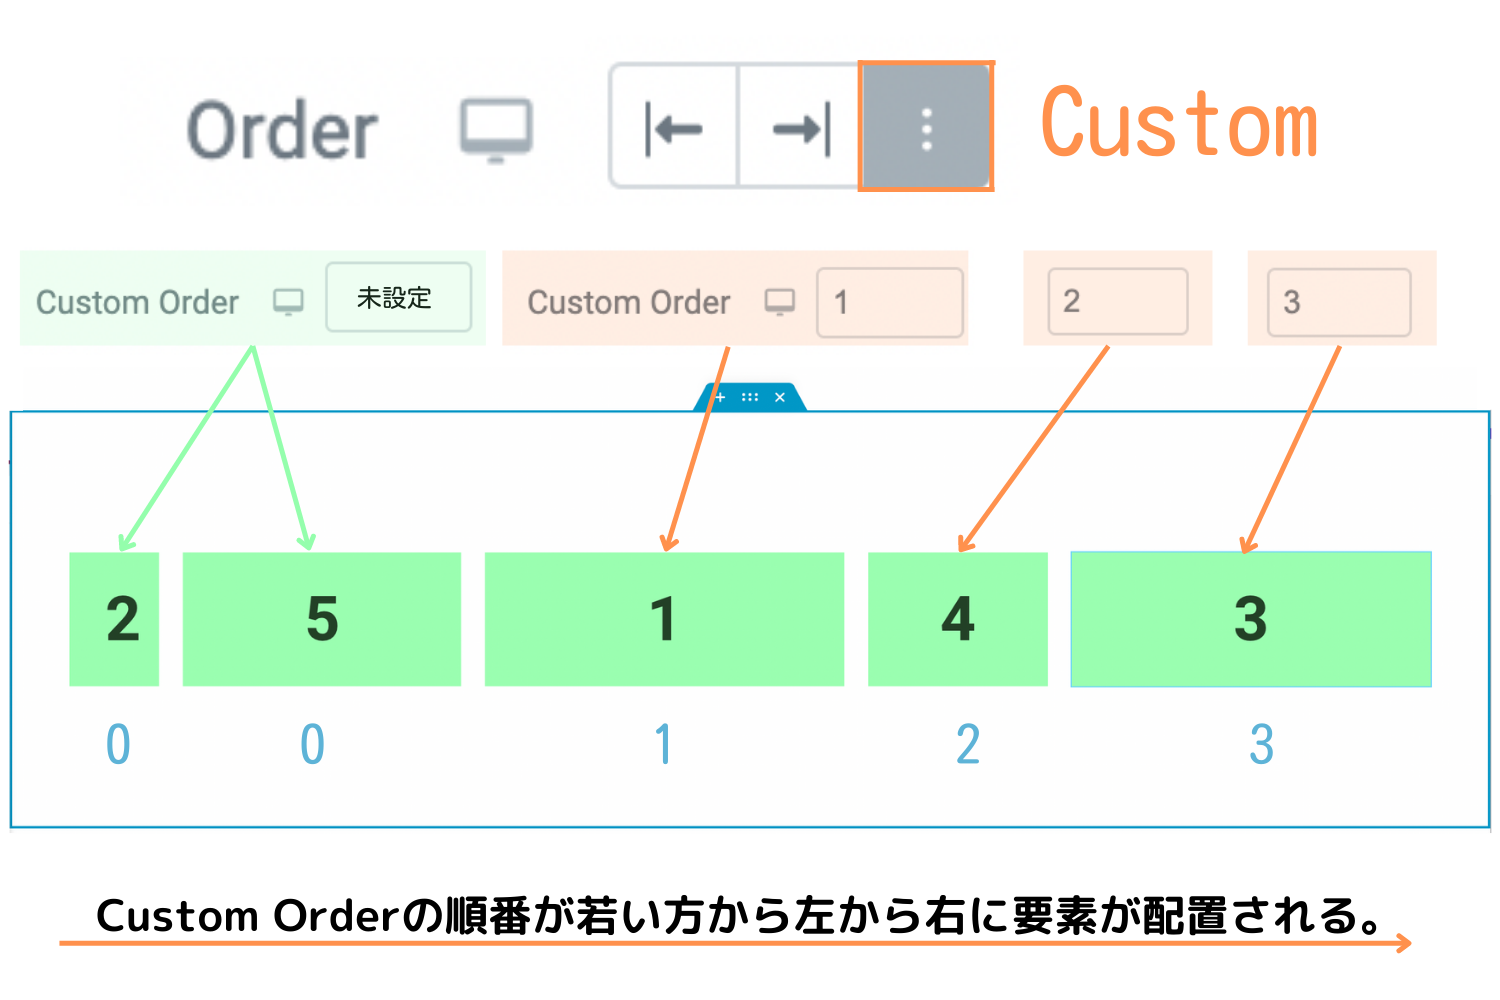 『Custom』でそれぞれの要素の配置をバラバラにしたときのサンプル